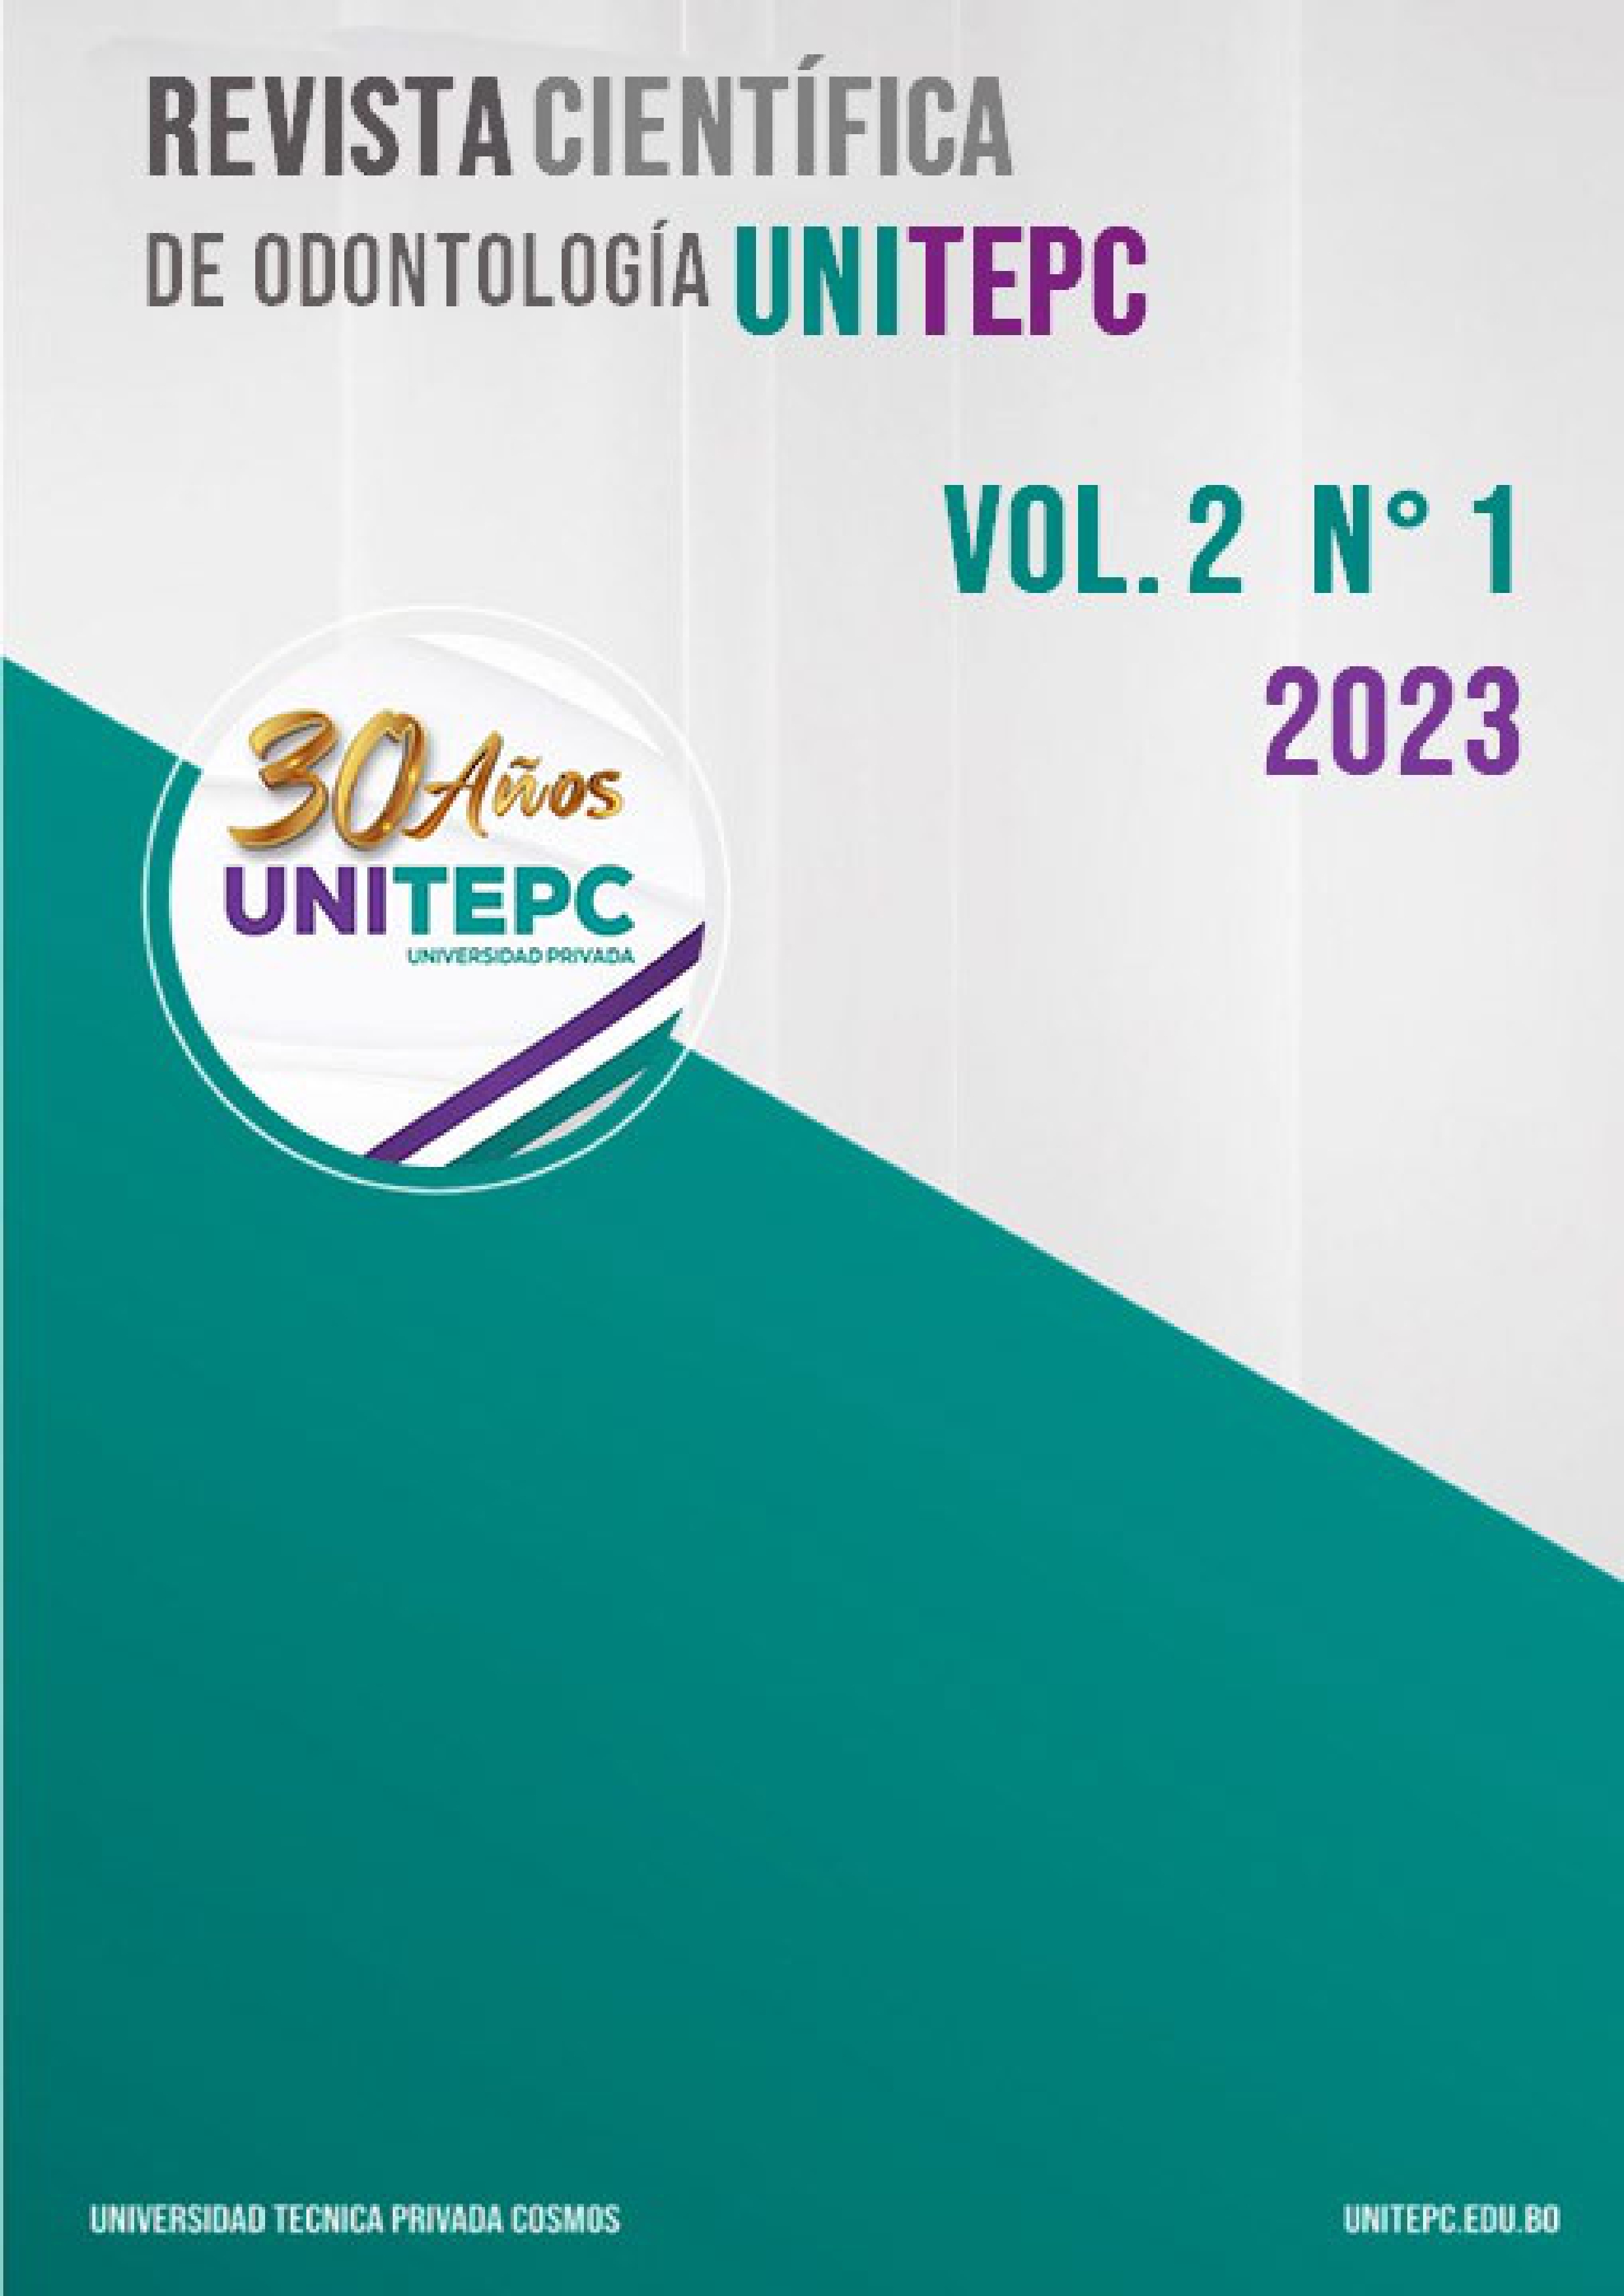 					Ver Vol. 2 Núm. 1 (2023): Revista Científica de Odontología UNITEPC
				